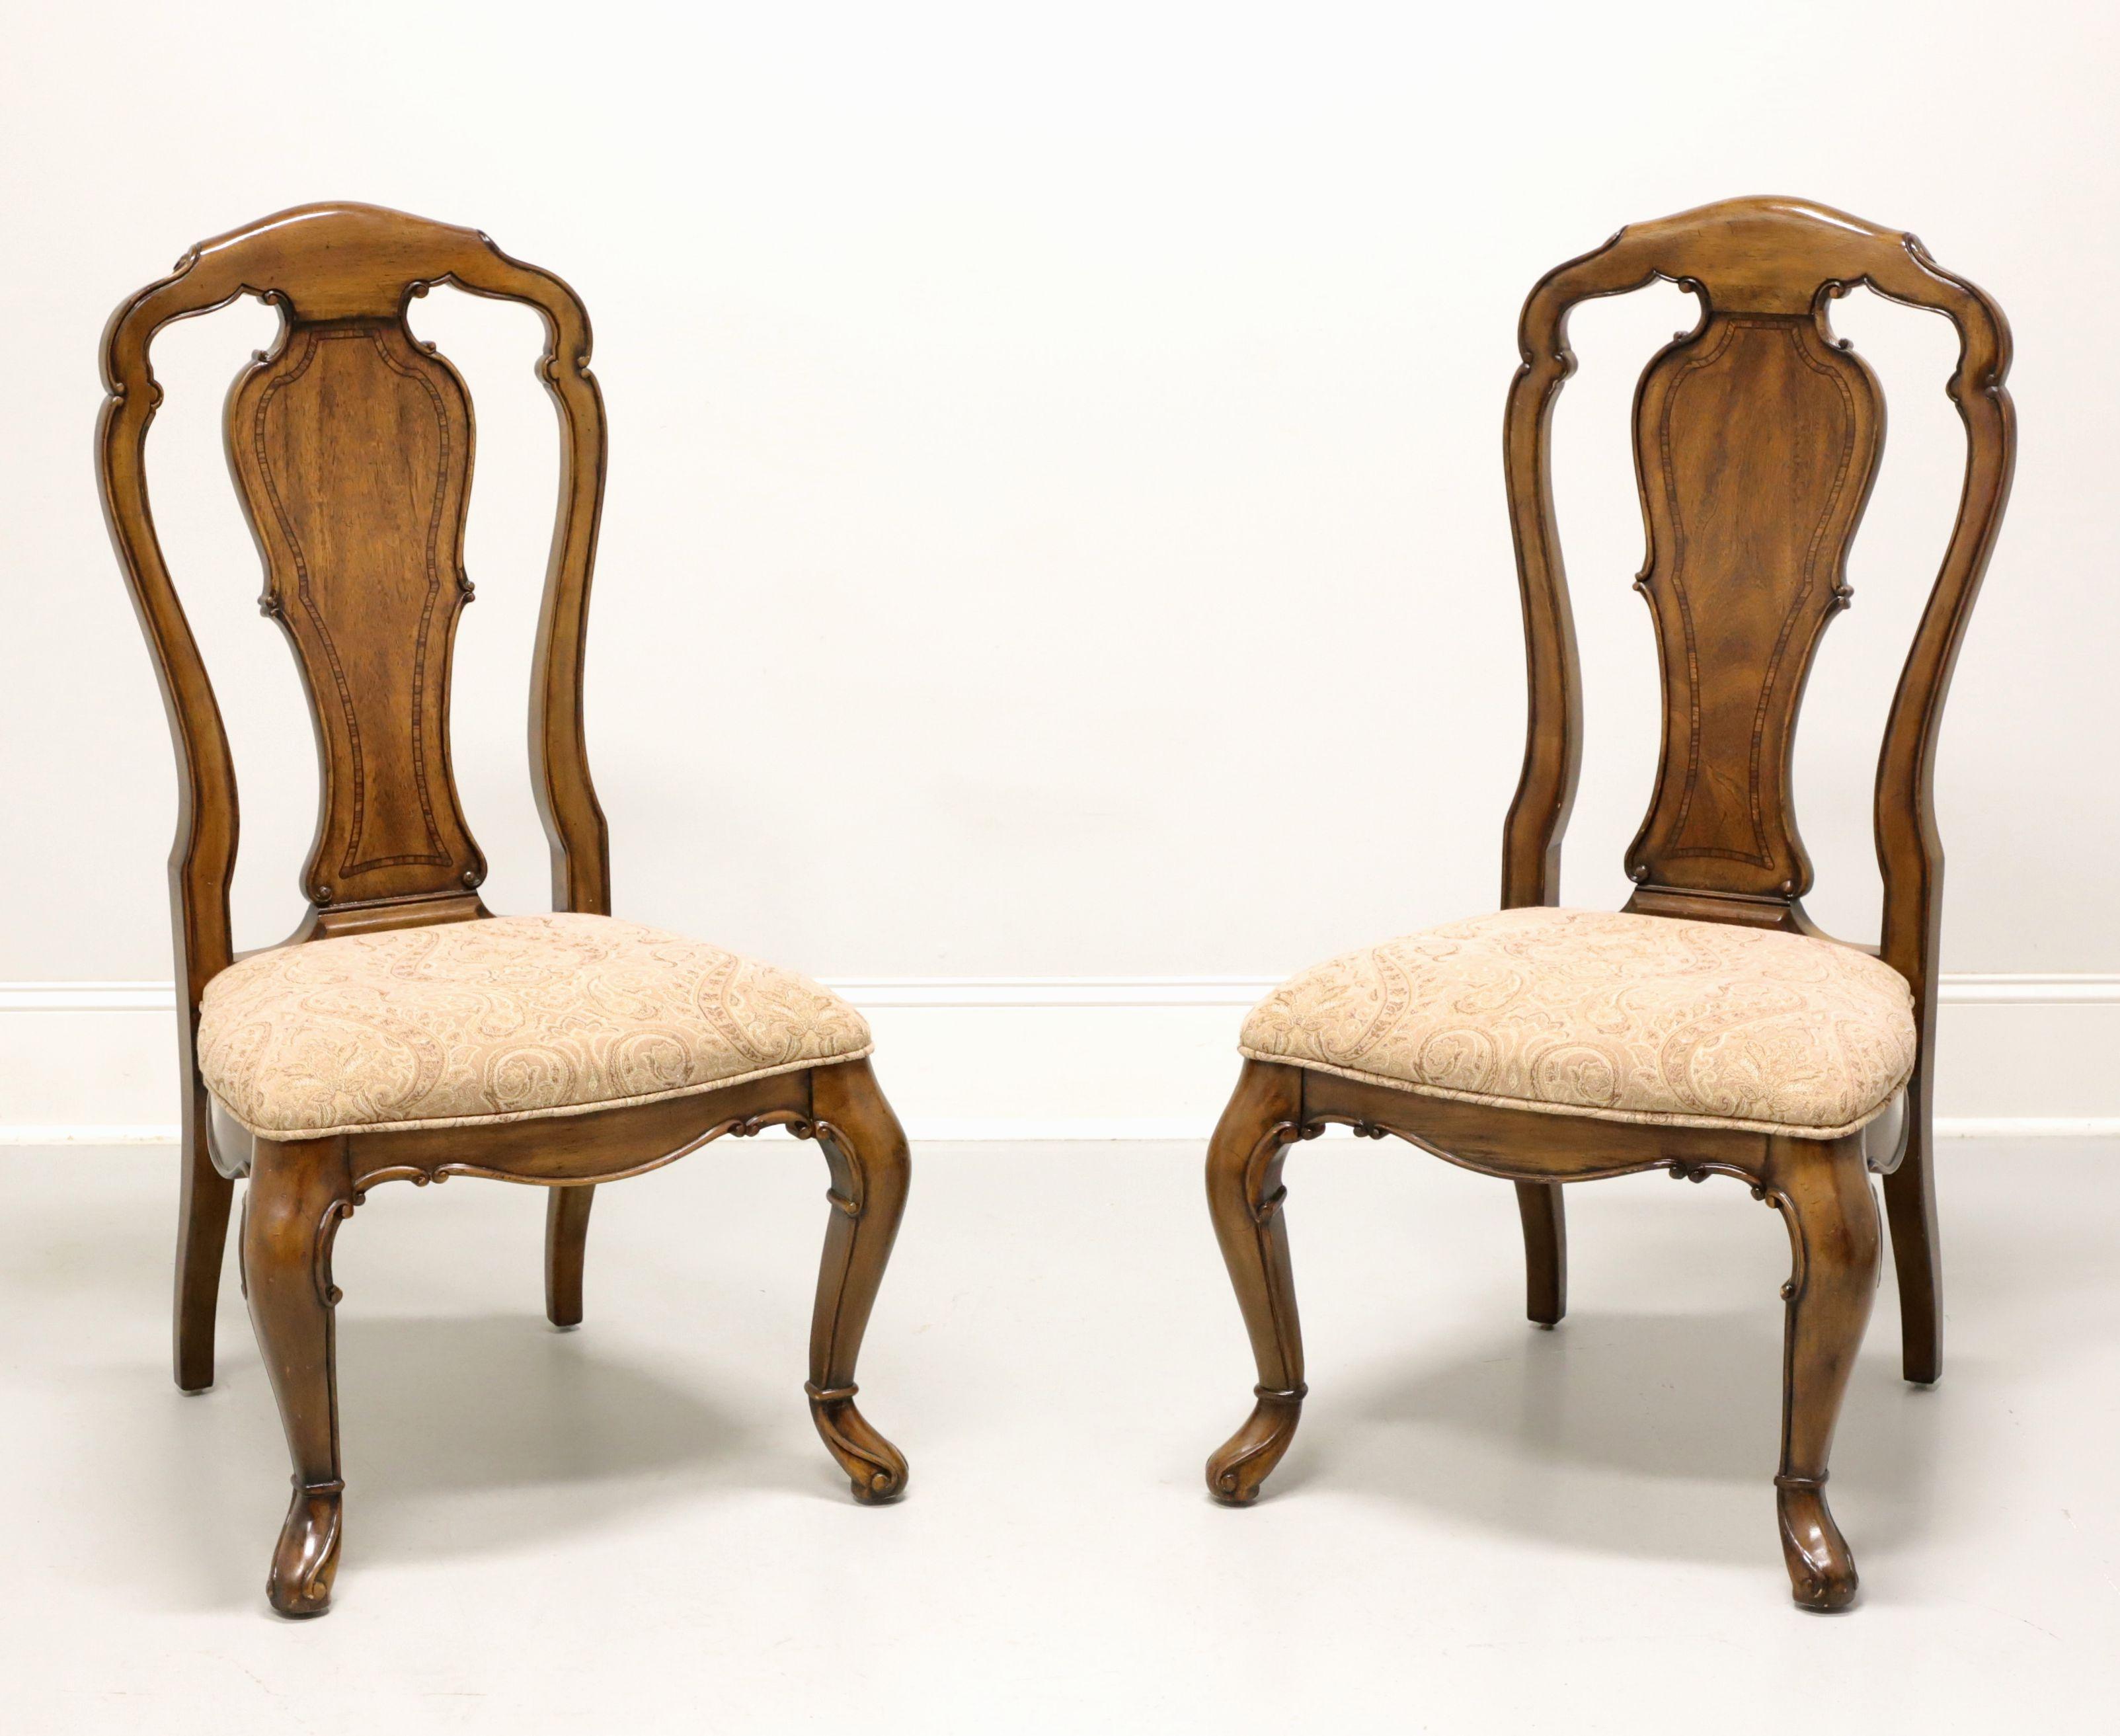 THOMASVILLE Hemingway Collection Granada Mahogany Dining Side Chairs - Pair A 1